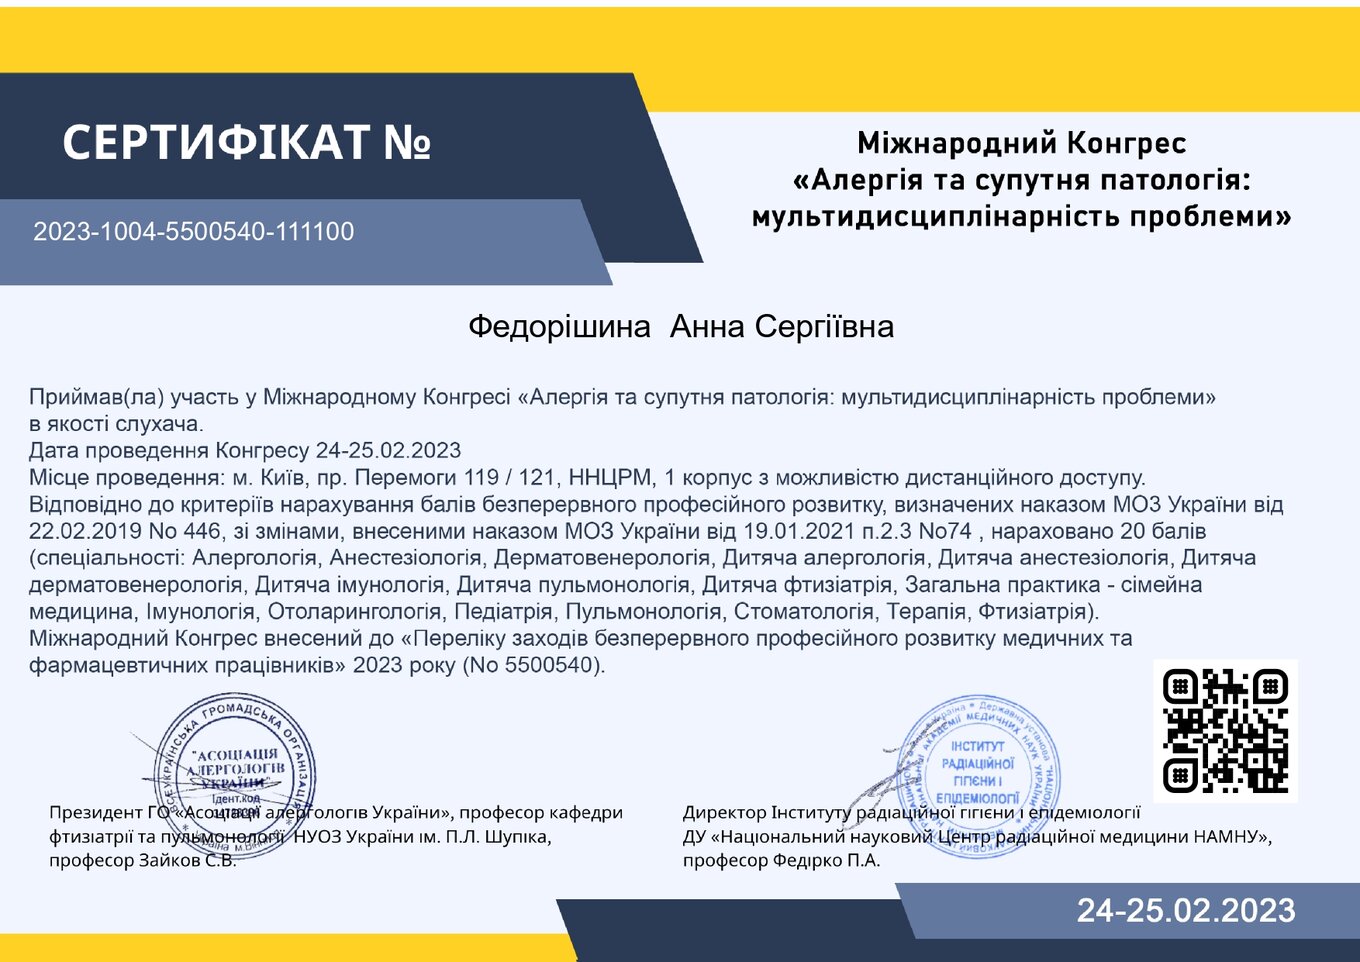 Fedorishina Anna Sergiyivna sertifikat14